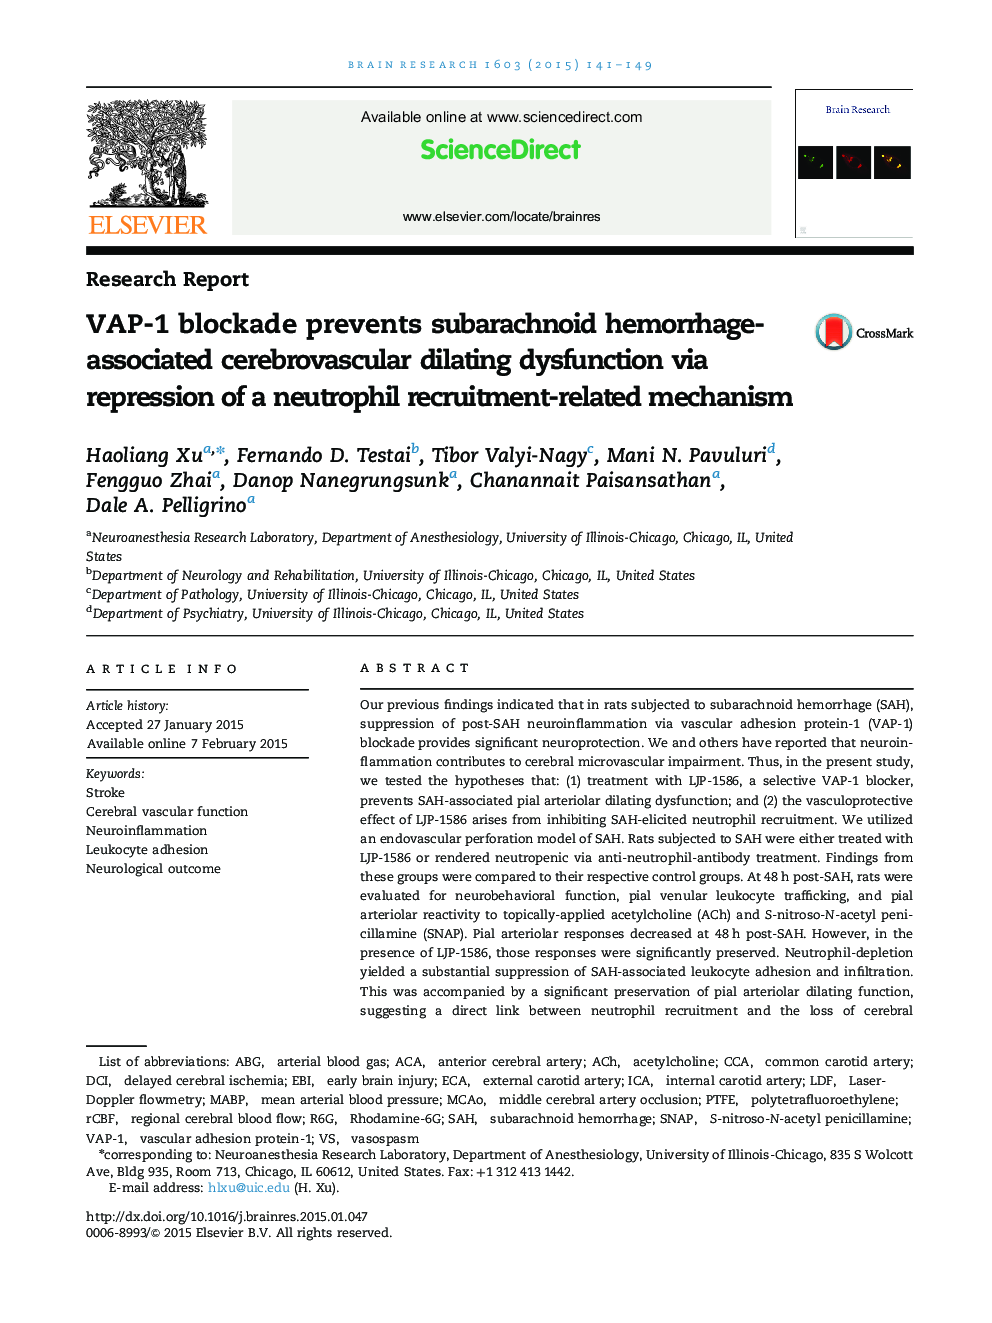 VAP-1 blockade prevents subarachnoid hemorrhage-associated cerebrovascular dilating dysfunction via repression of a neutrophil recruitment-related mechanism